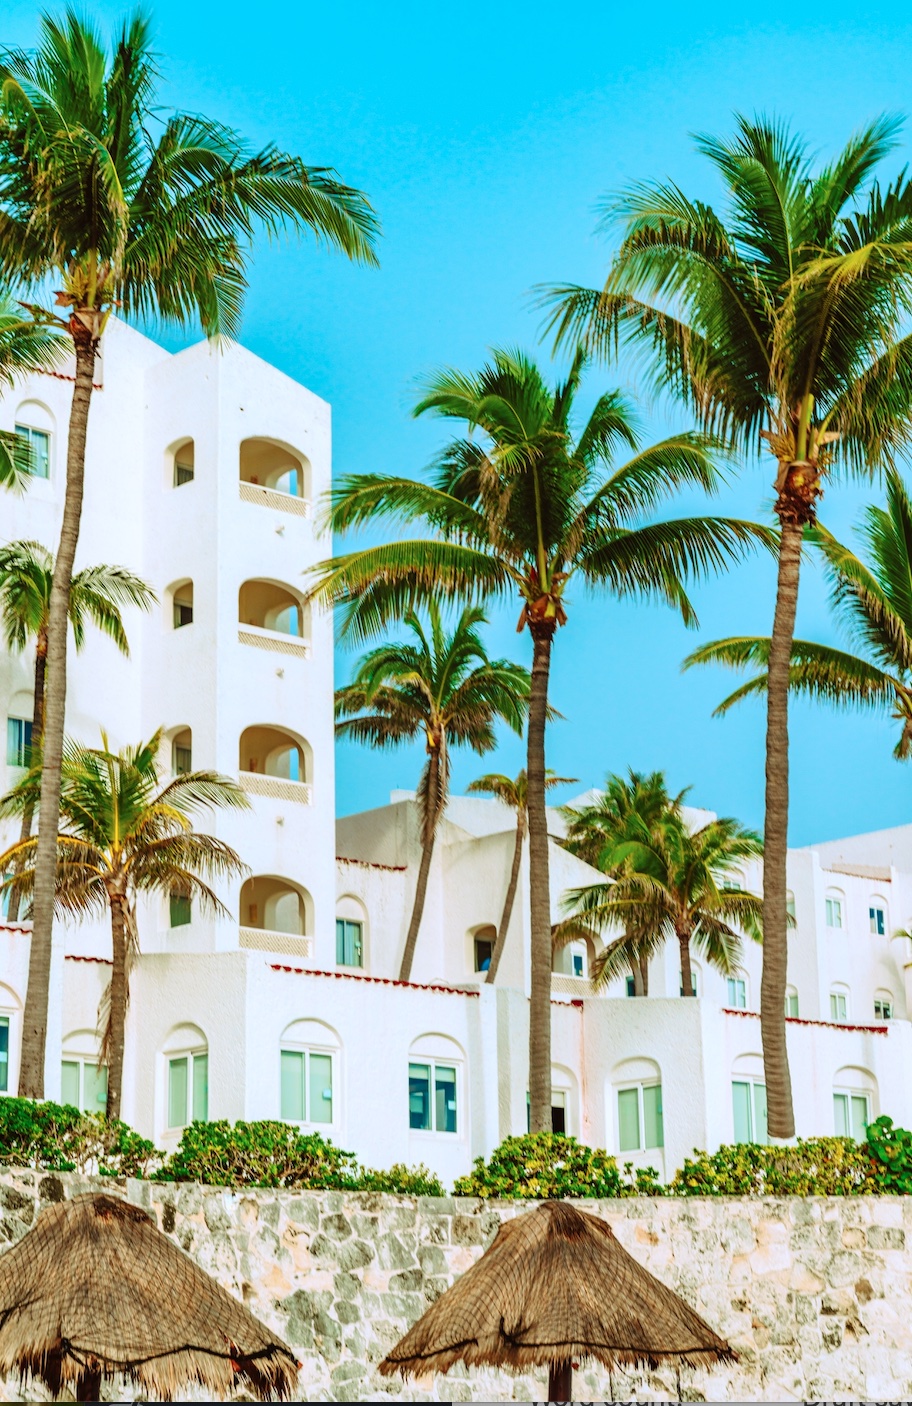 Tropical hotel with palm trees; image by Meritt Thomas, via Unsplash.com.